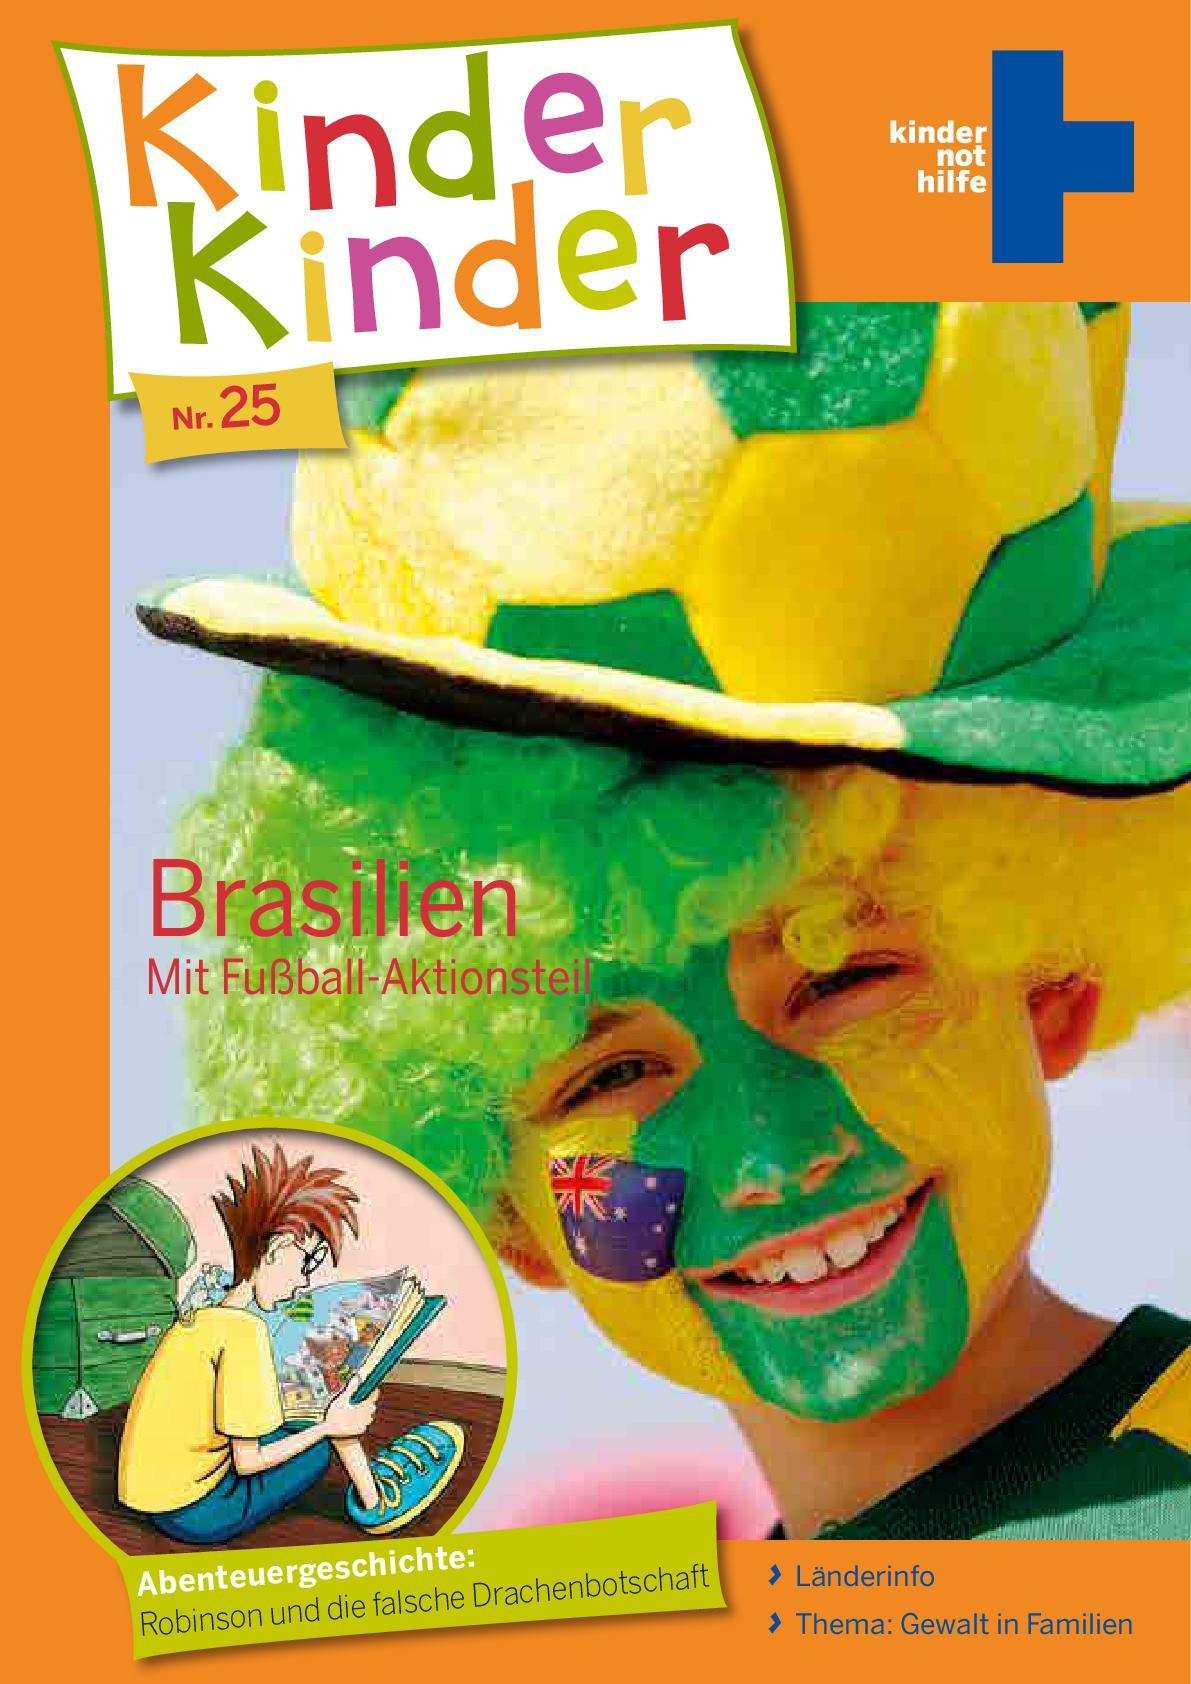 Titelbild "Kinder, Kinder" 25/Brasilien (Quelle: Peter Laux)